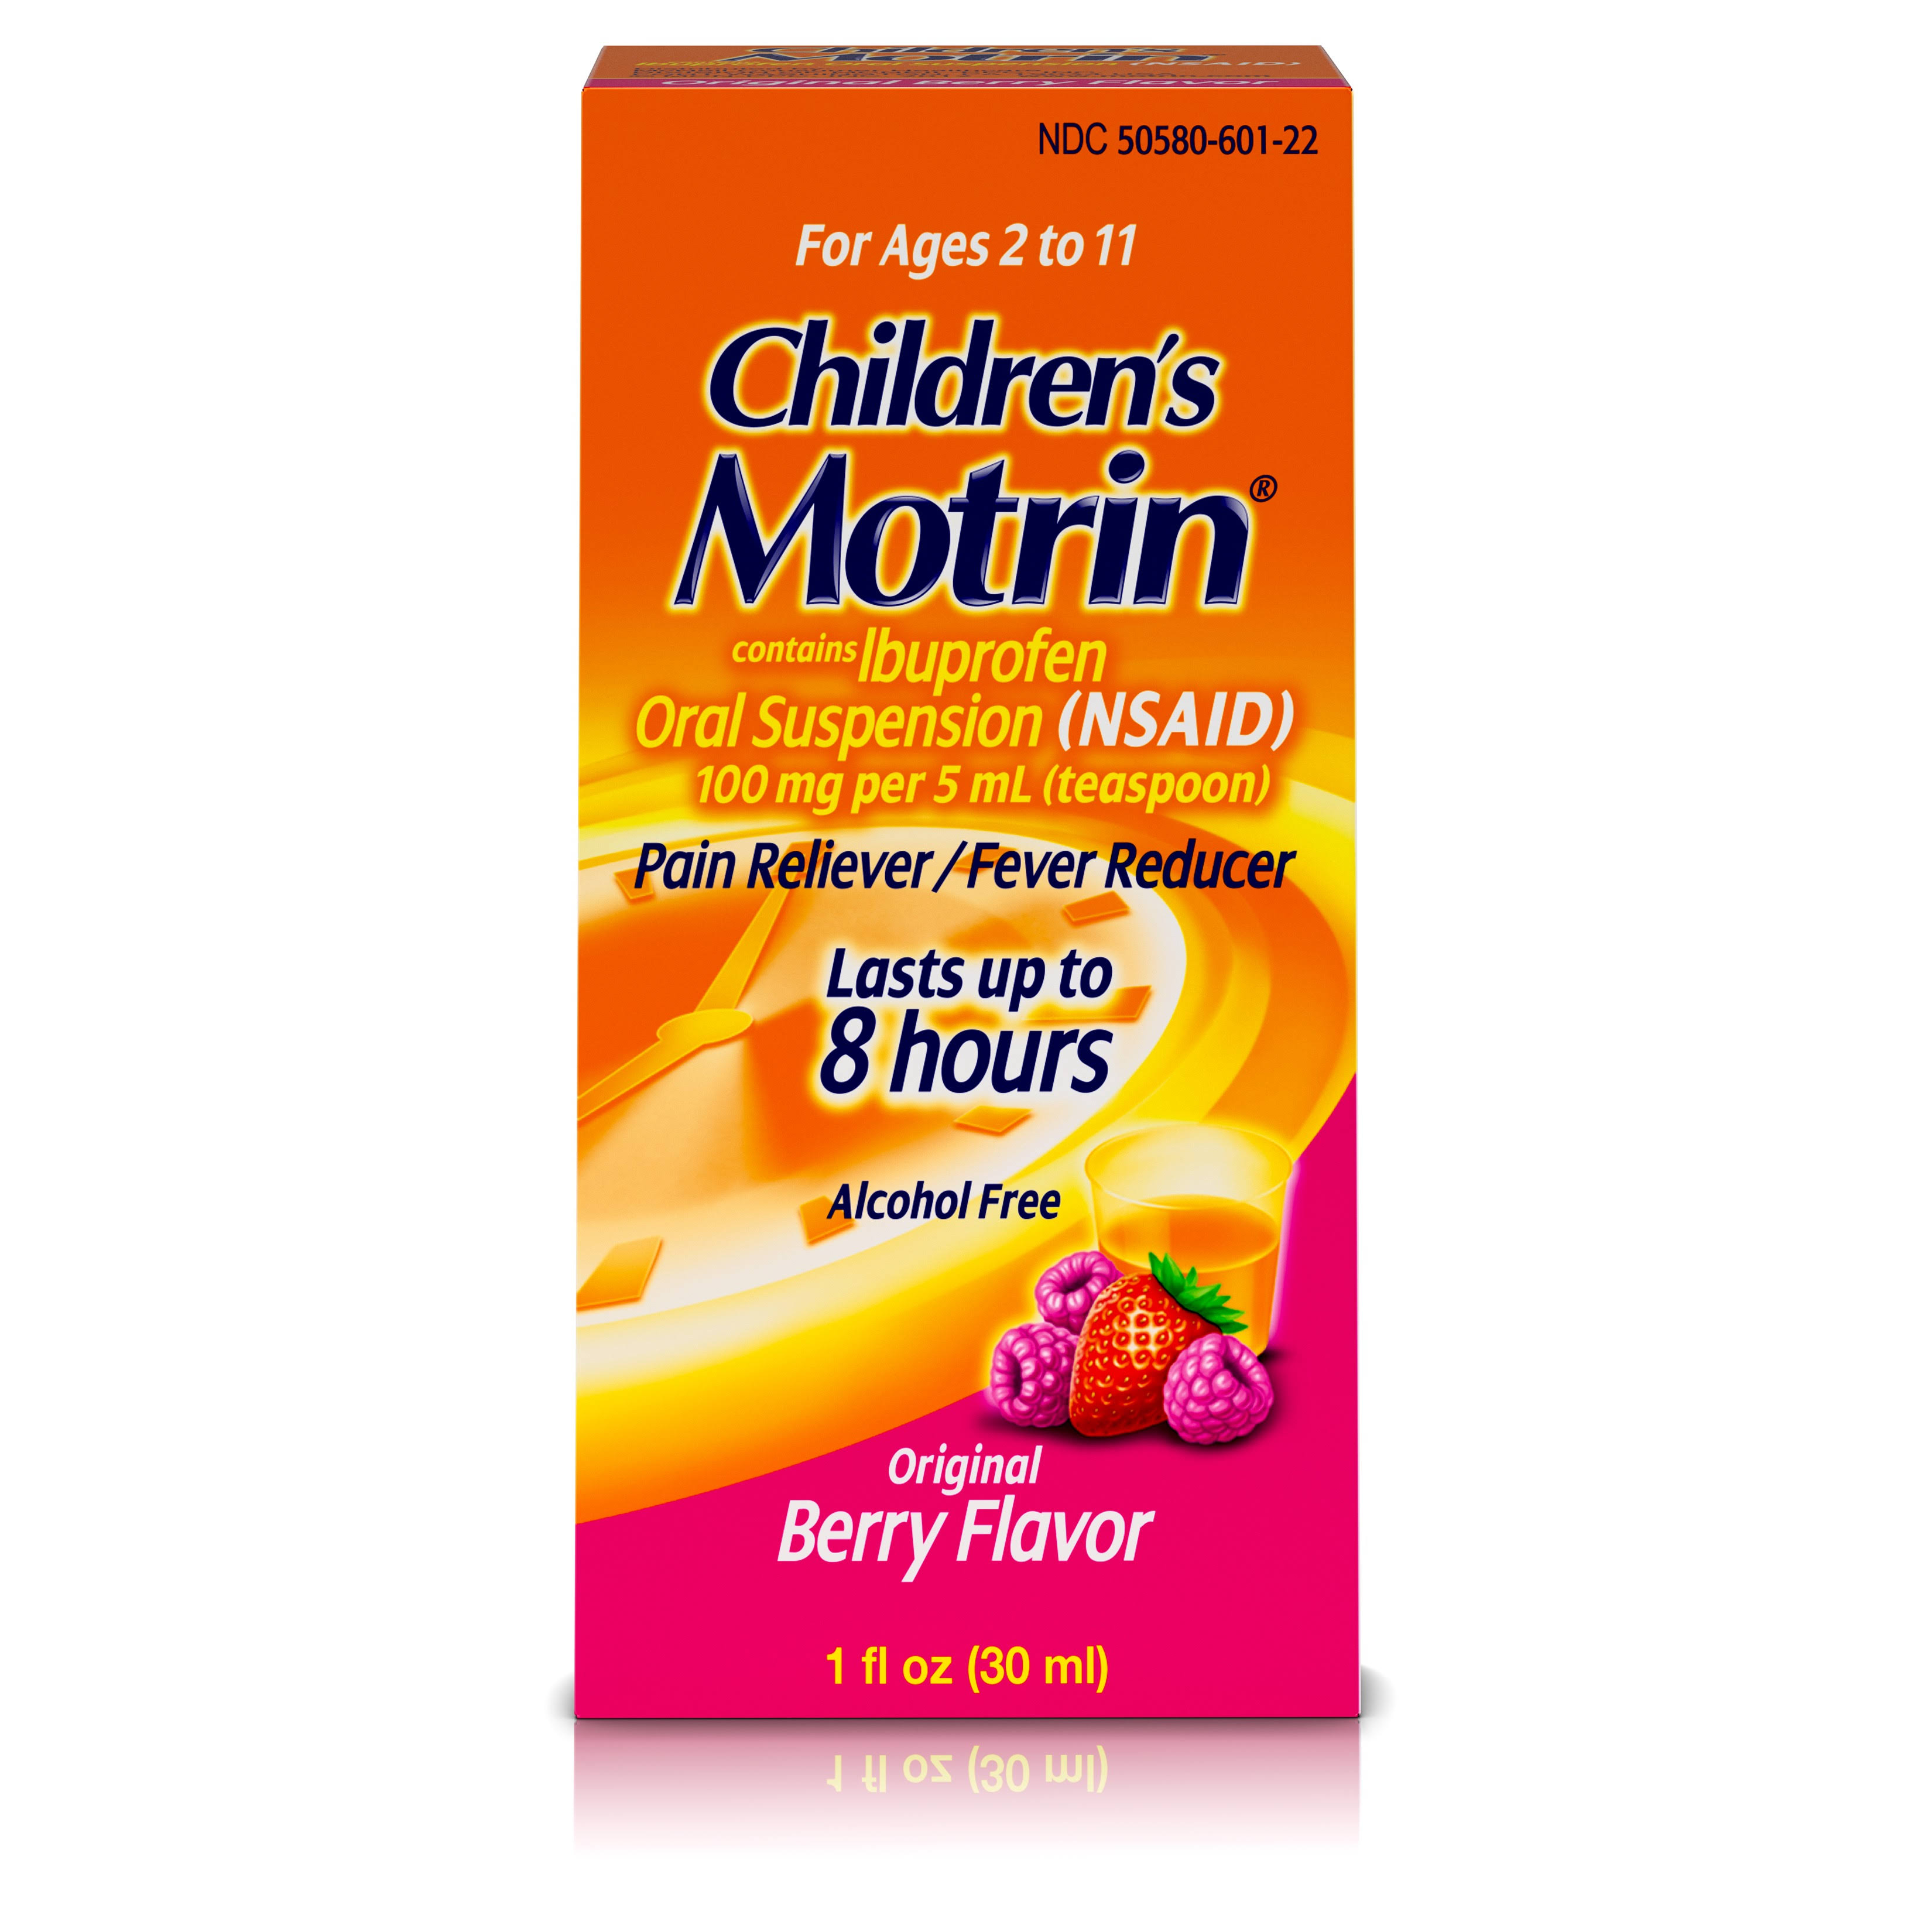 Children's Motrin Pain Reliever Fever Reducer Oral Suspension - Original Berry Flavor, 1oz